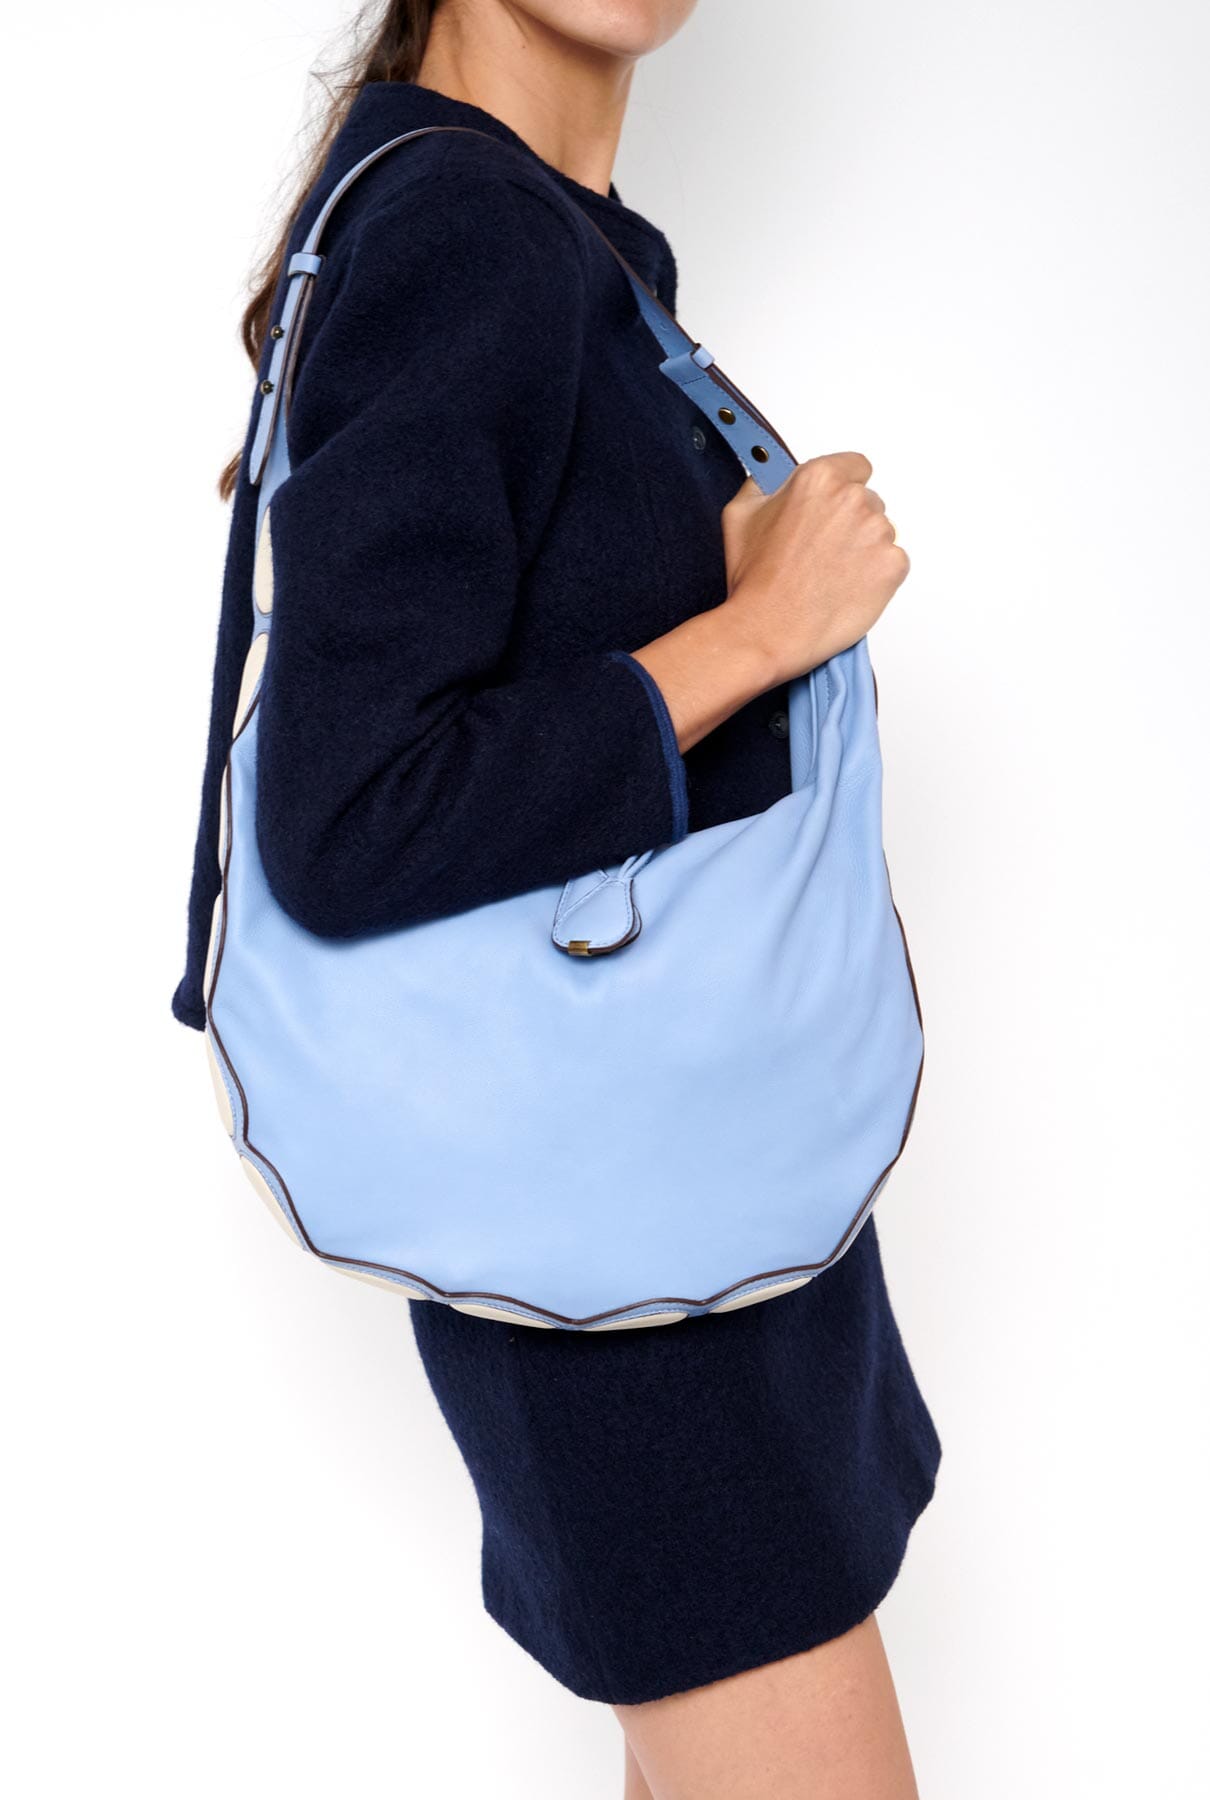 Arlequin Sky Blue Shoulder bags Tissa Fontaneda 